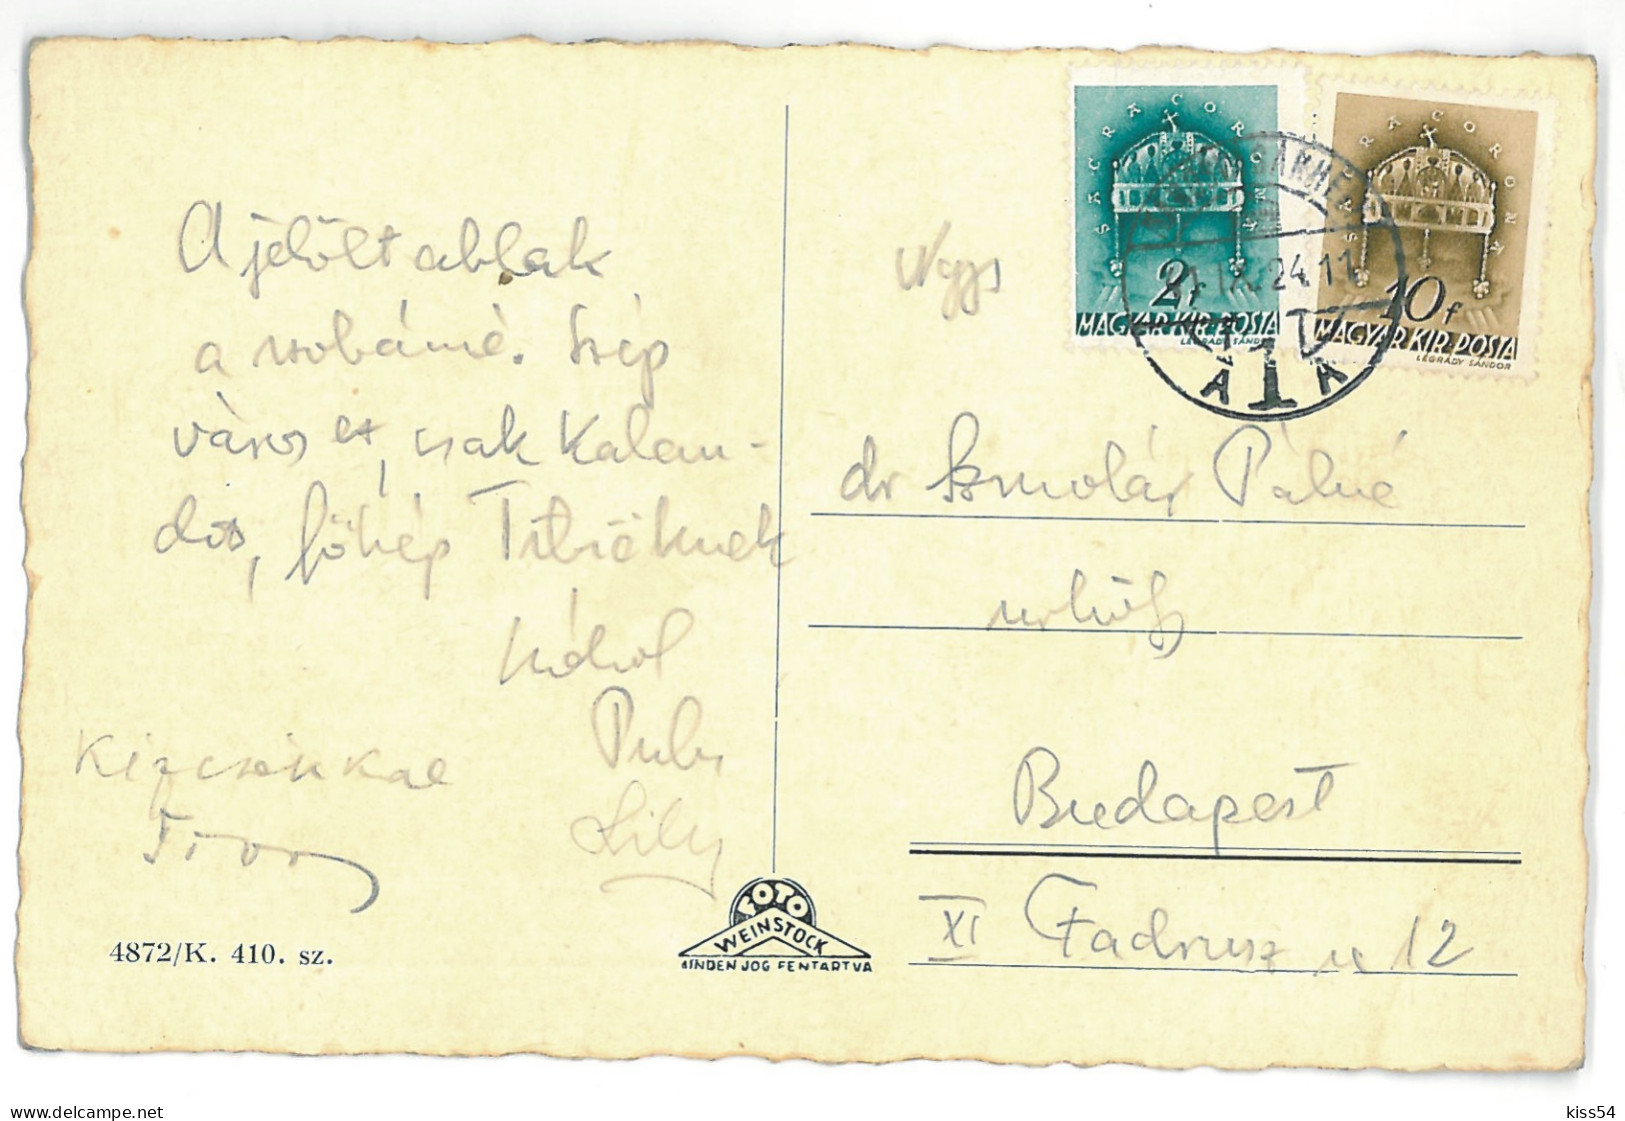 RO 45 - 14907 TARGU MURES, Market, Romania - Old Postcard - Used - 1941 - Romania